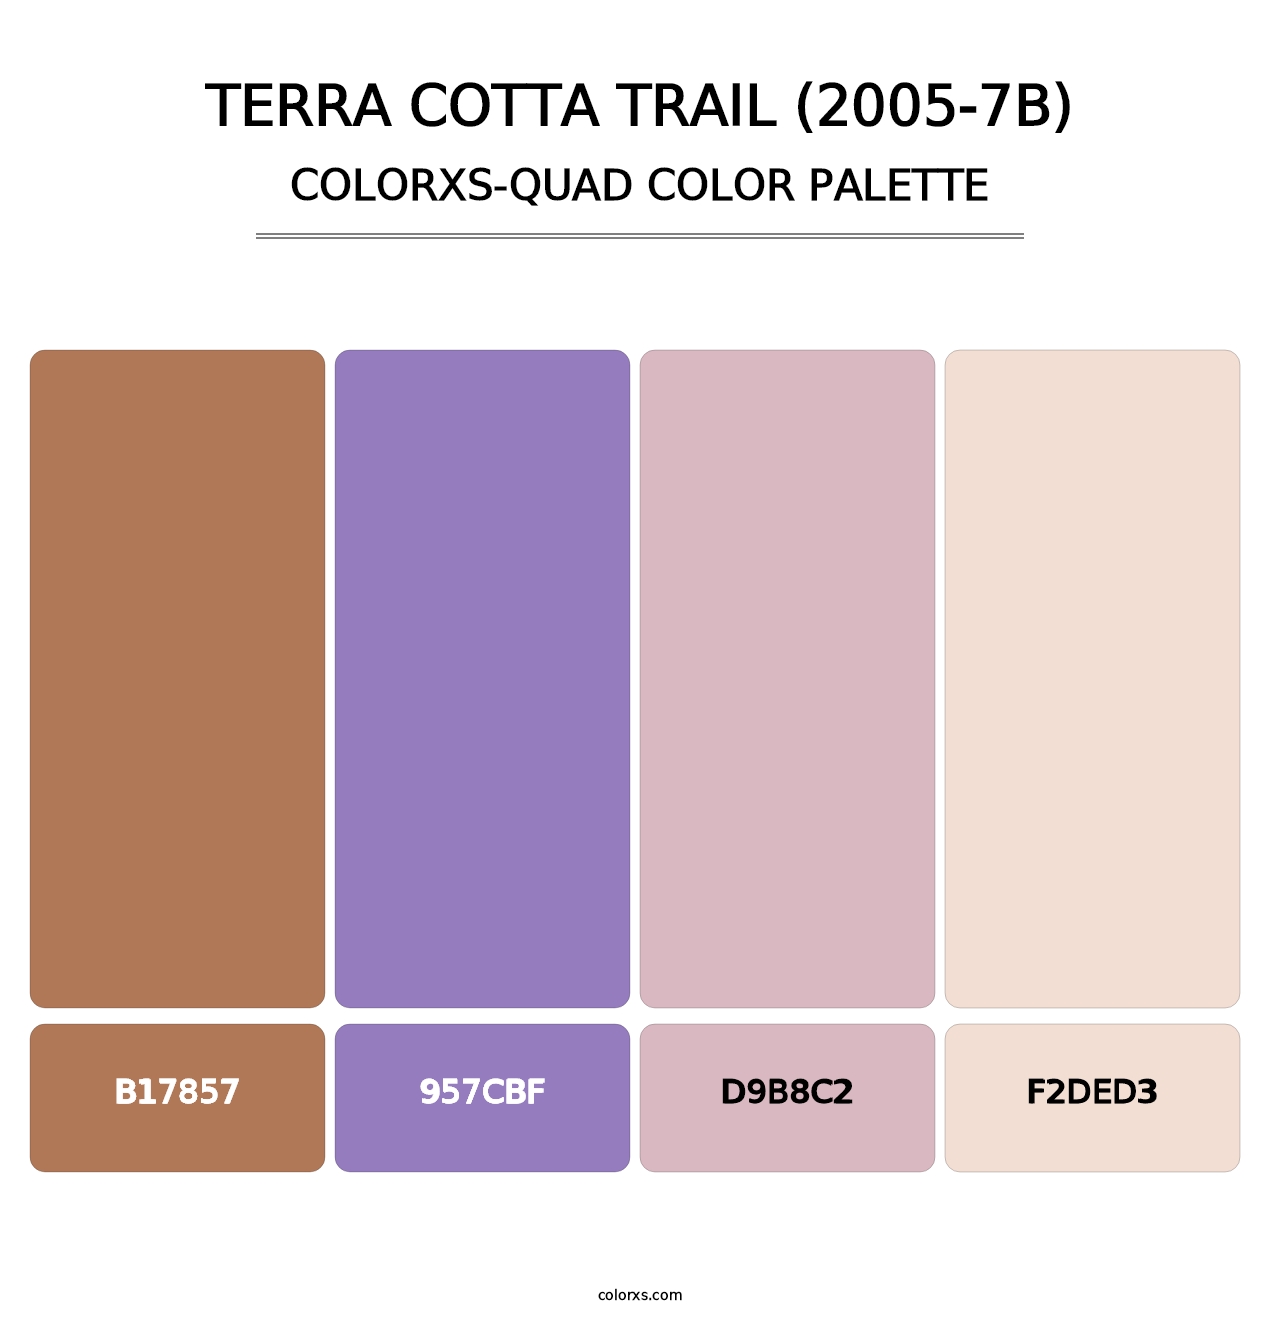 Terra Cotta Trail (2005-7B) - Colorxs Quad Palette